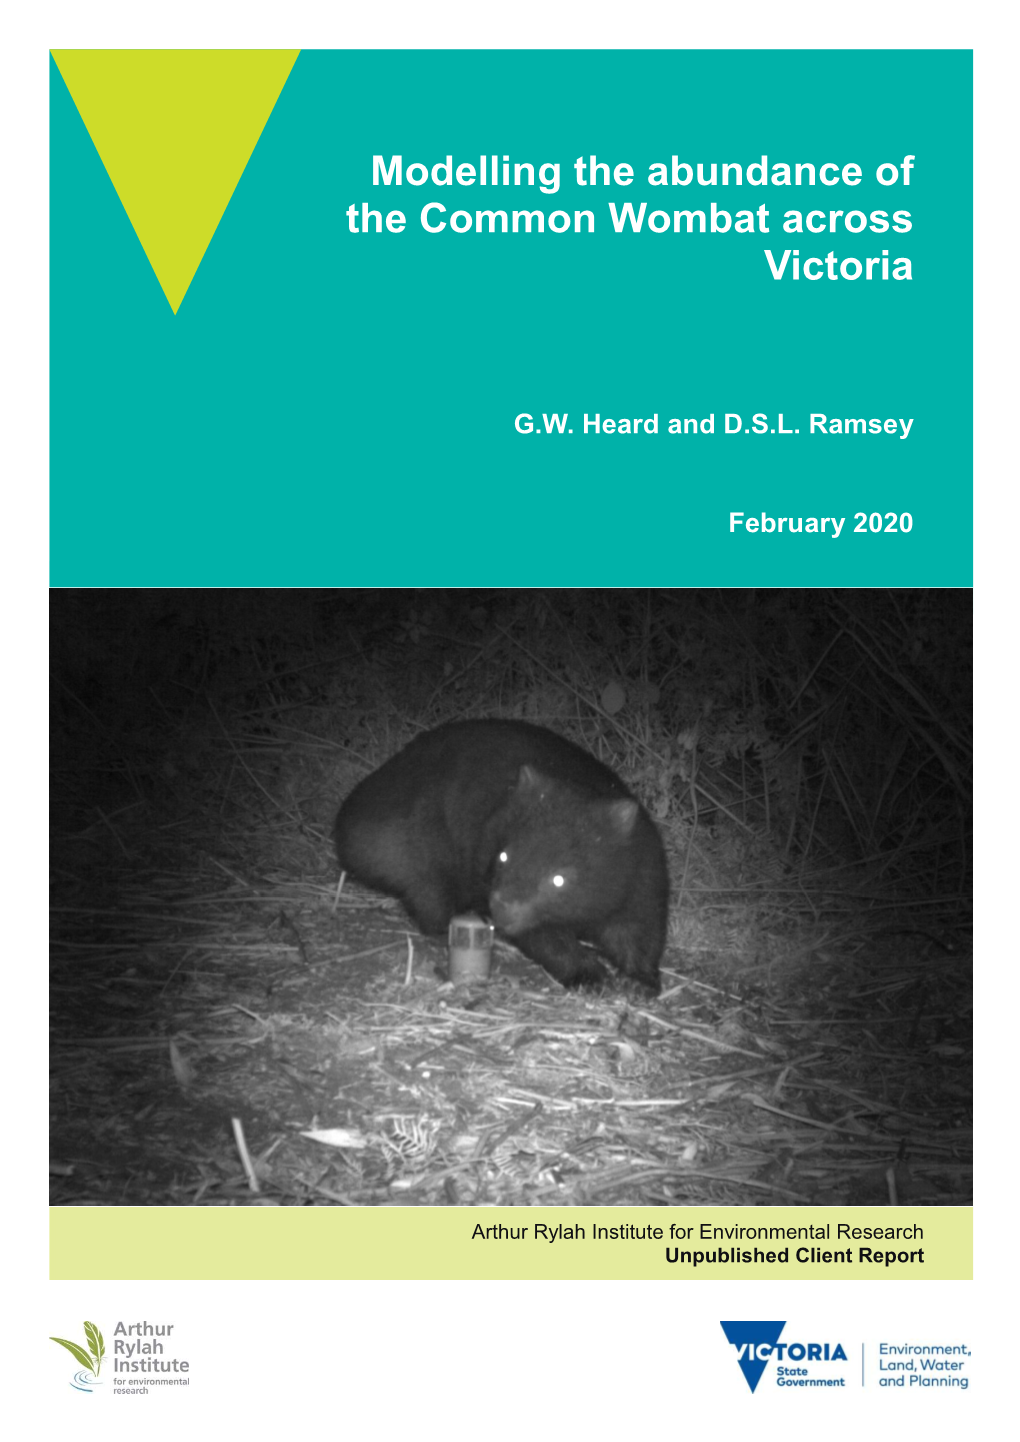 Modelling the Abundance of the Common Wombat Across Victoria